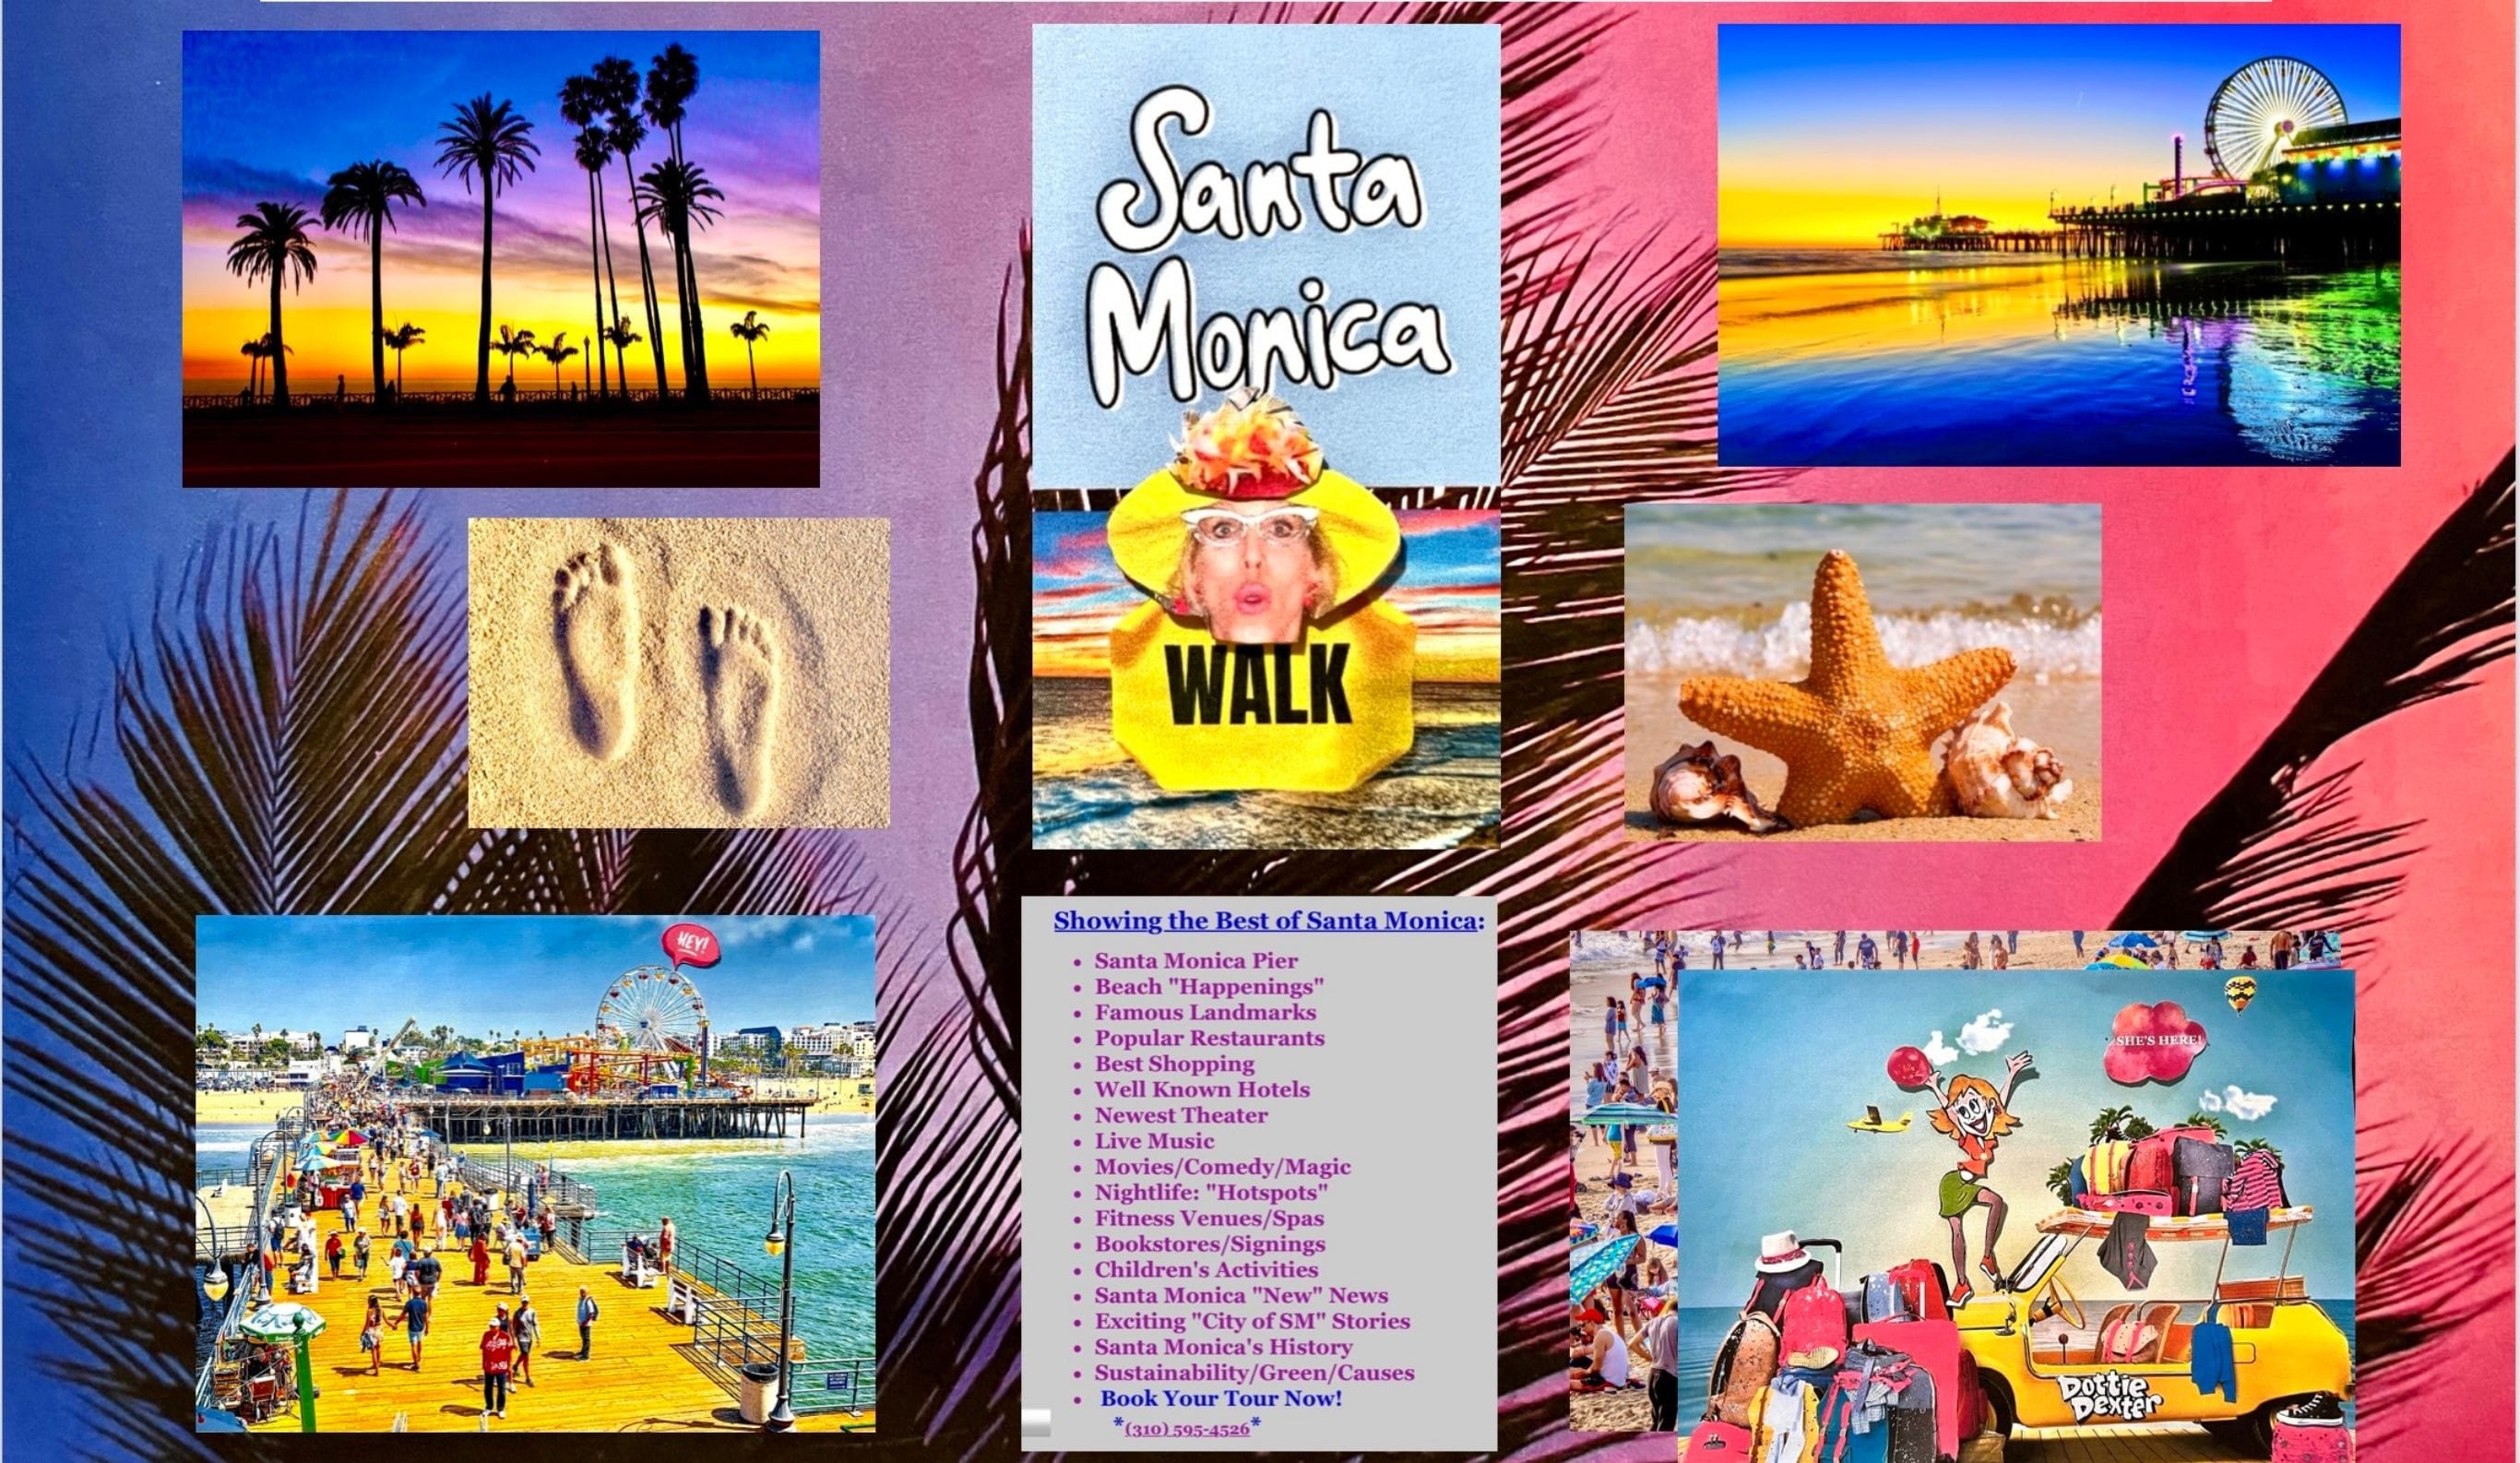 Santa Monica Pier, Santa Monica beach,l Historical Santa Monica Landmarks, Popular Santa Monica Restaurants, Best Santa Monica Shopping, Best Hotels, Nightlife!